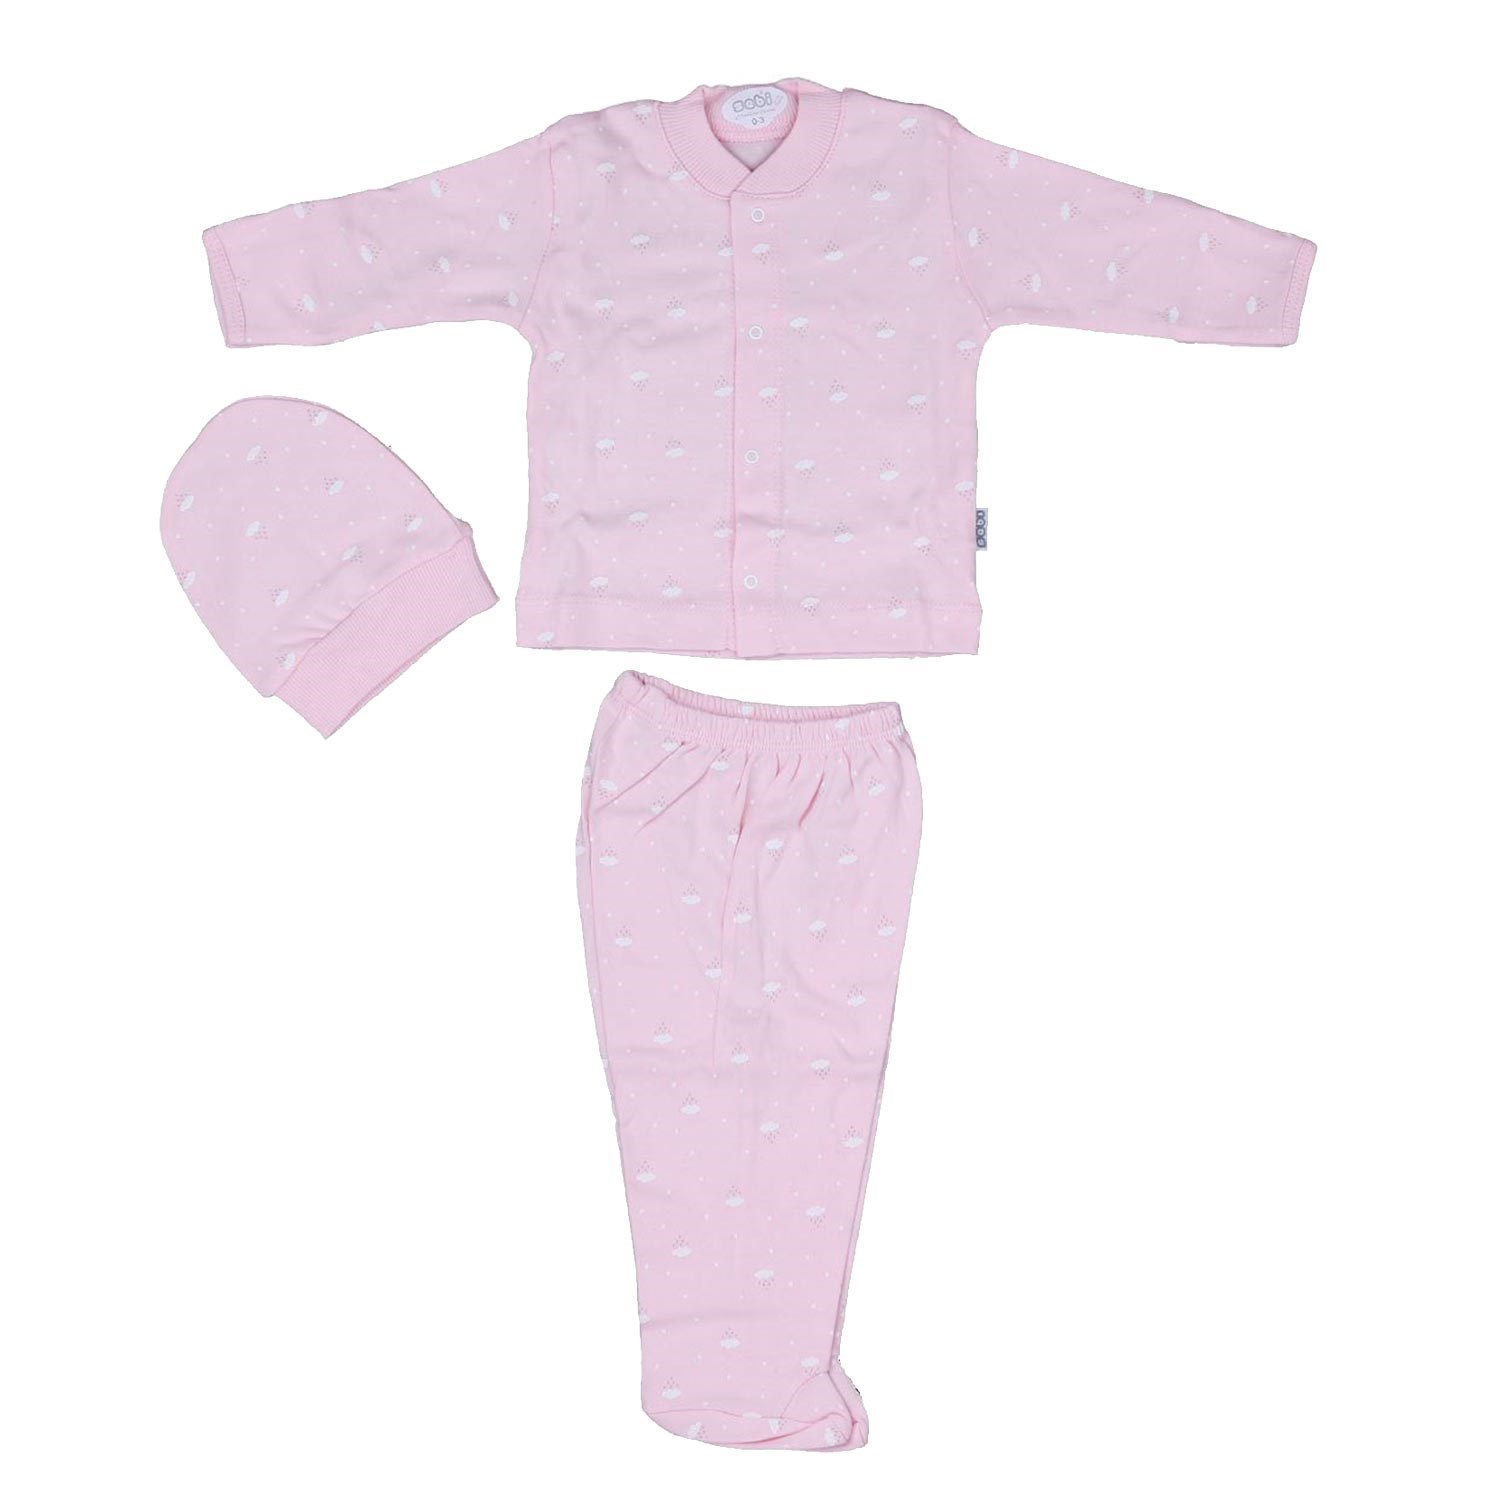 Sebi Bebe Bulutlu Bebek Pijama Takımı 2253 Pembe